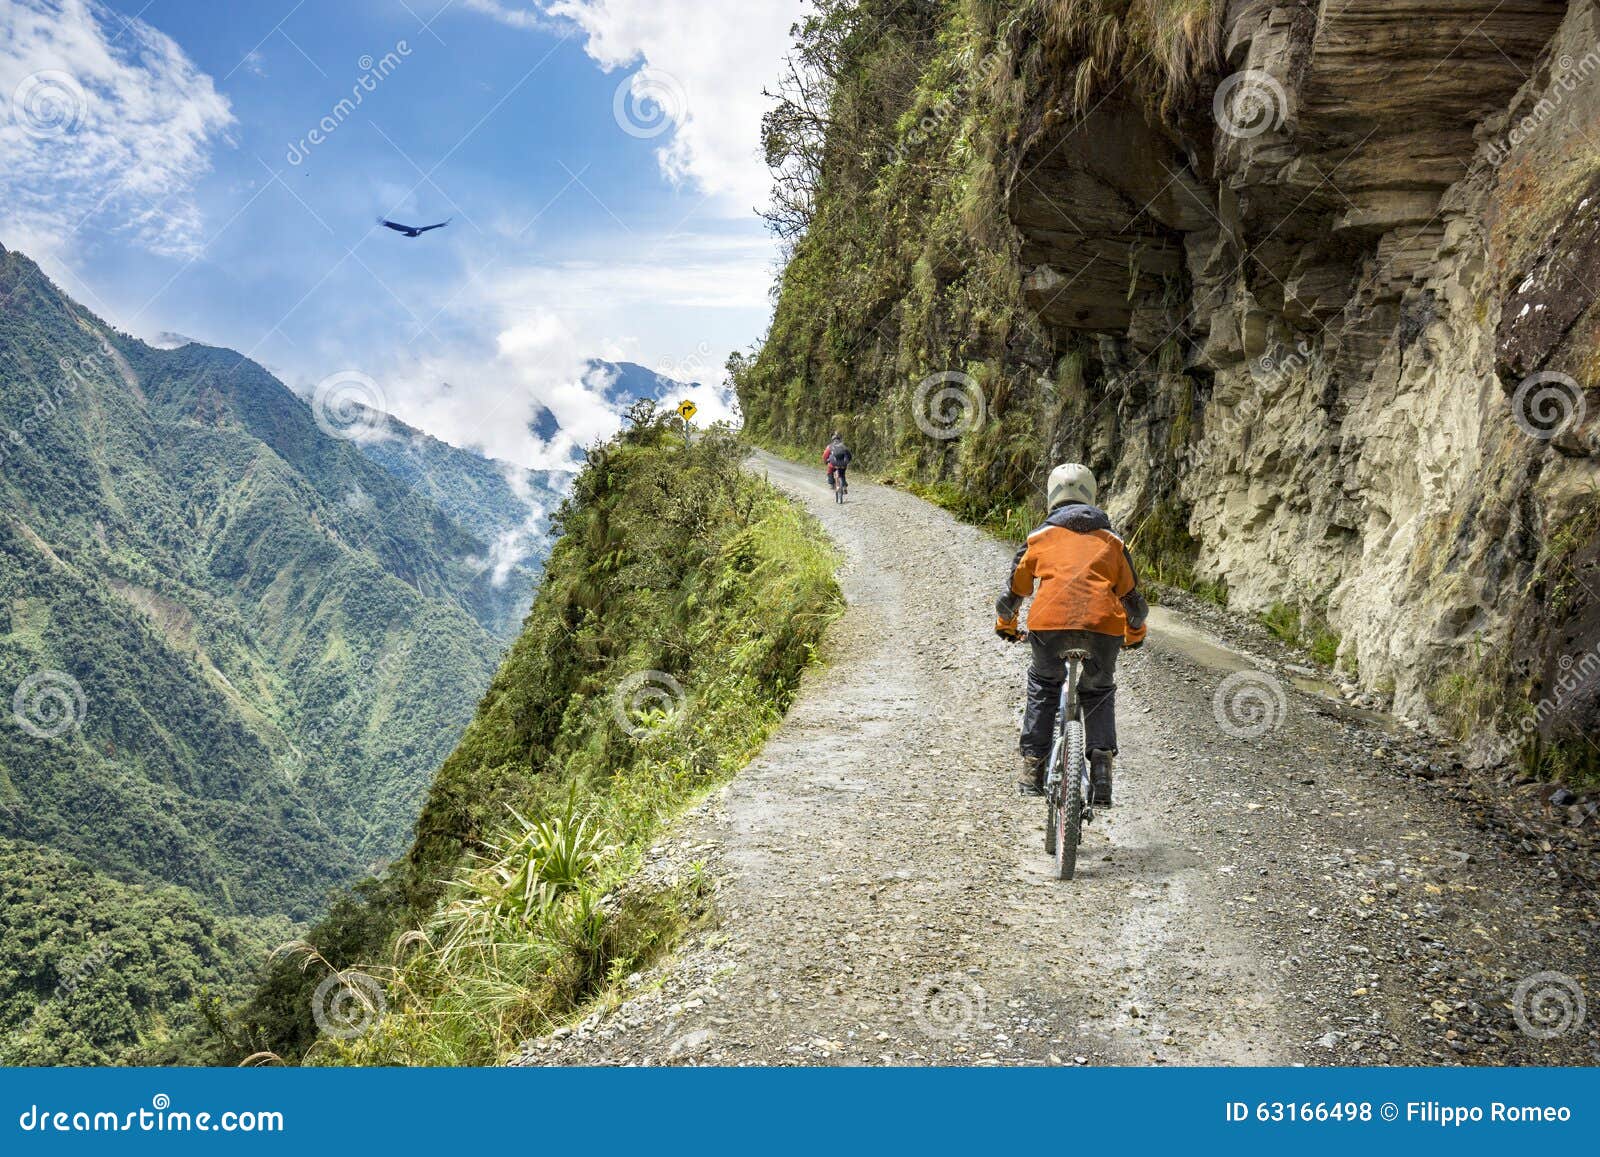 adventure travel downhill biking road of death